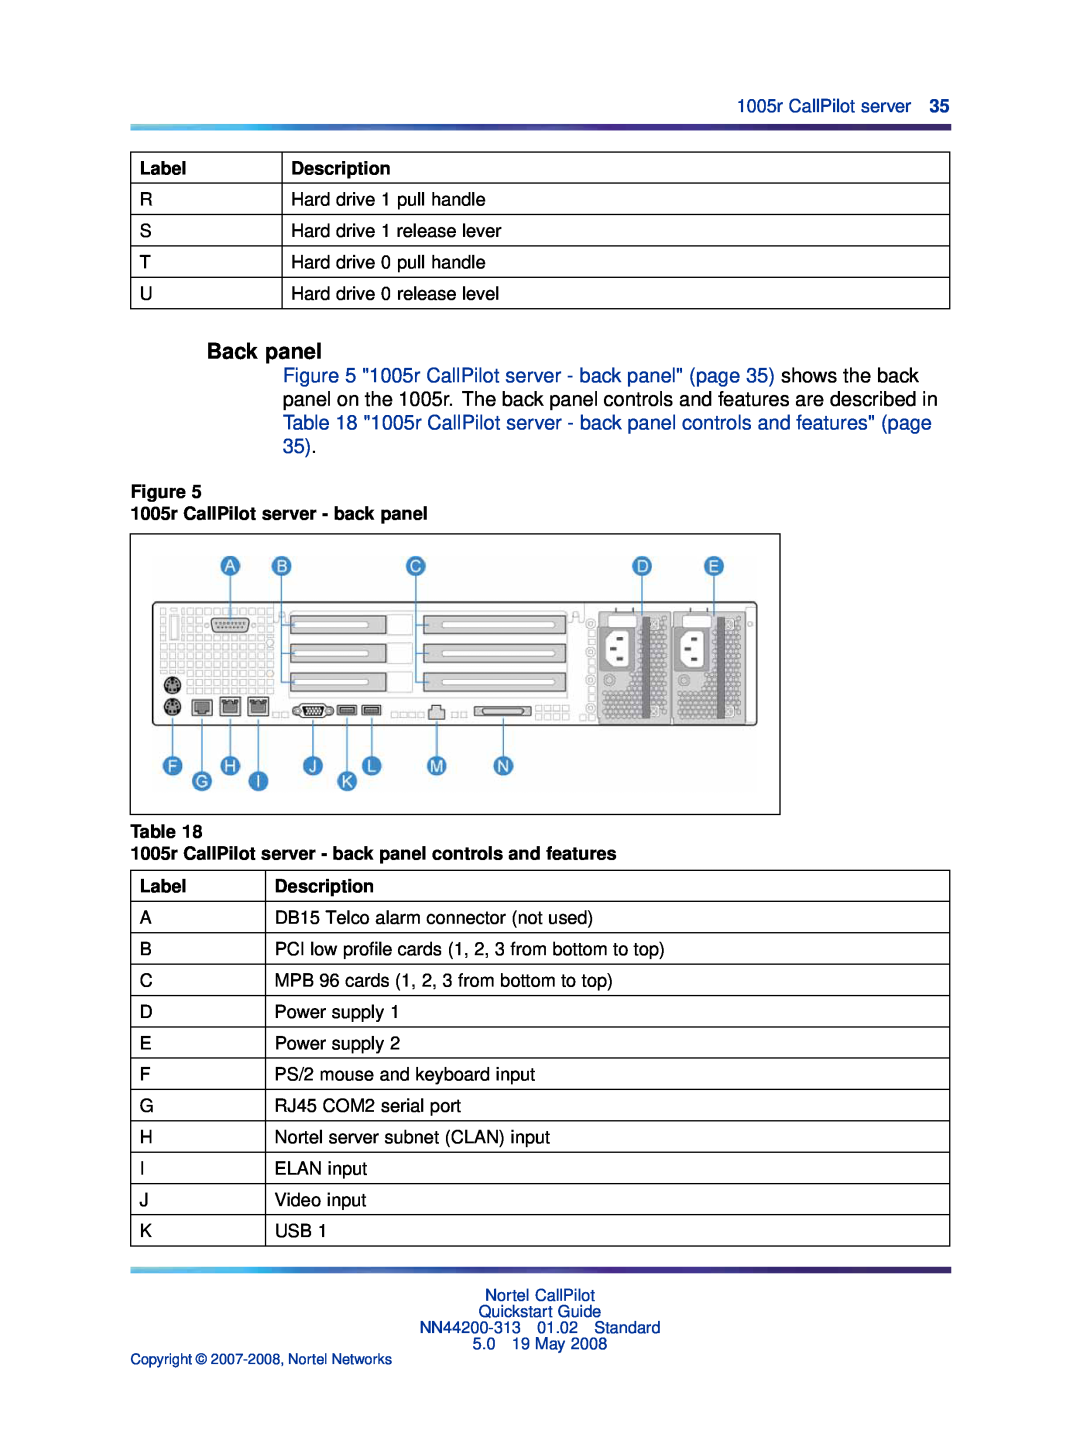 Nortel Networks NN44200-313 quick start Back panel, Label, Description, 1005r CallPilot server - back panel 